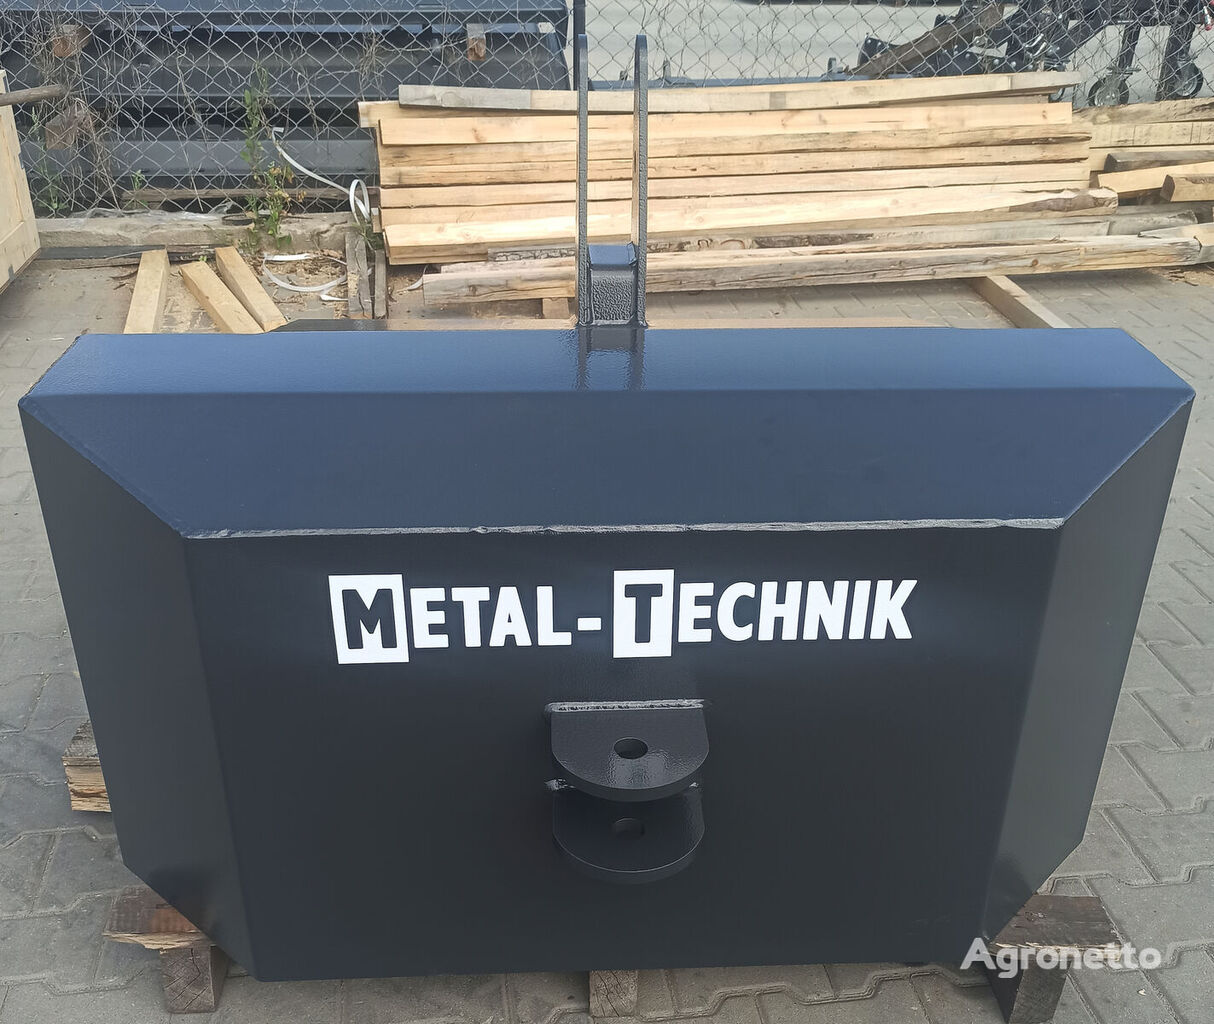 Metal-Technik BALAST-OBCIĄŻNIK andere landbouwmachines